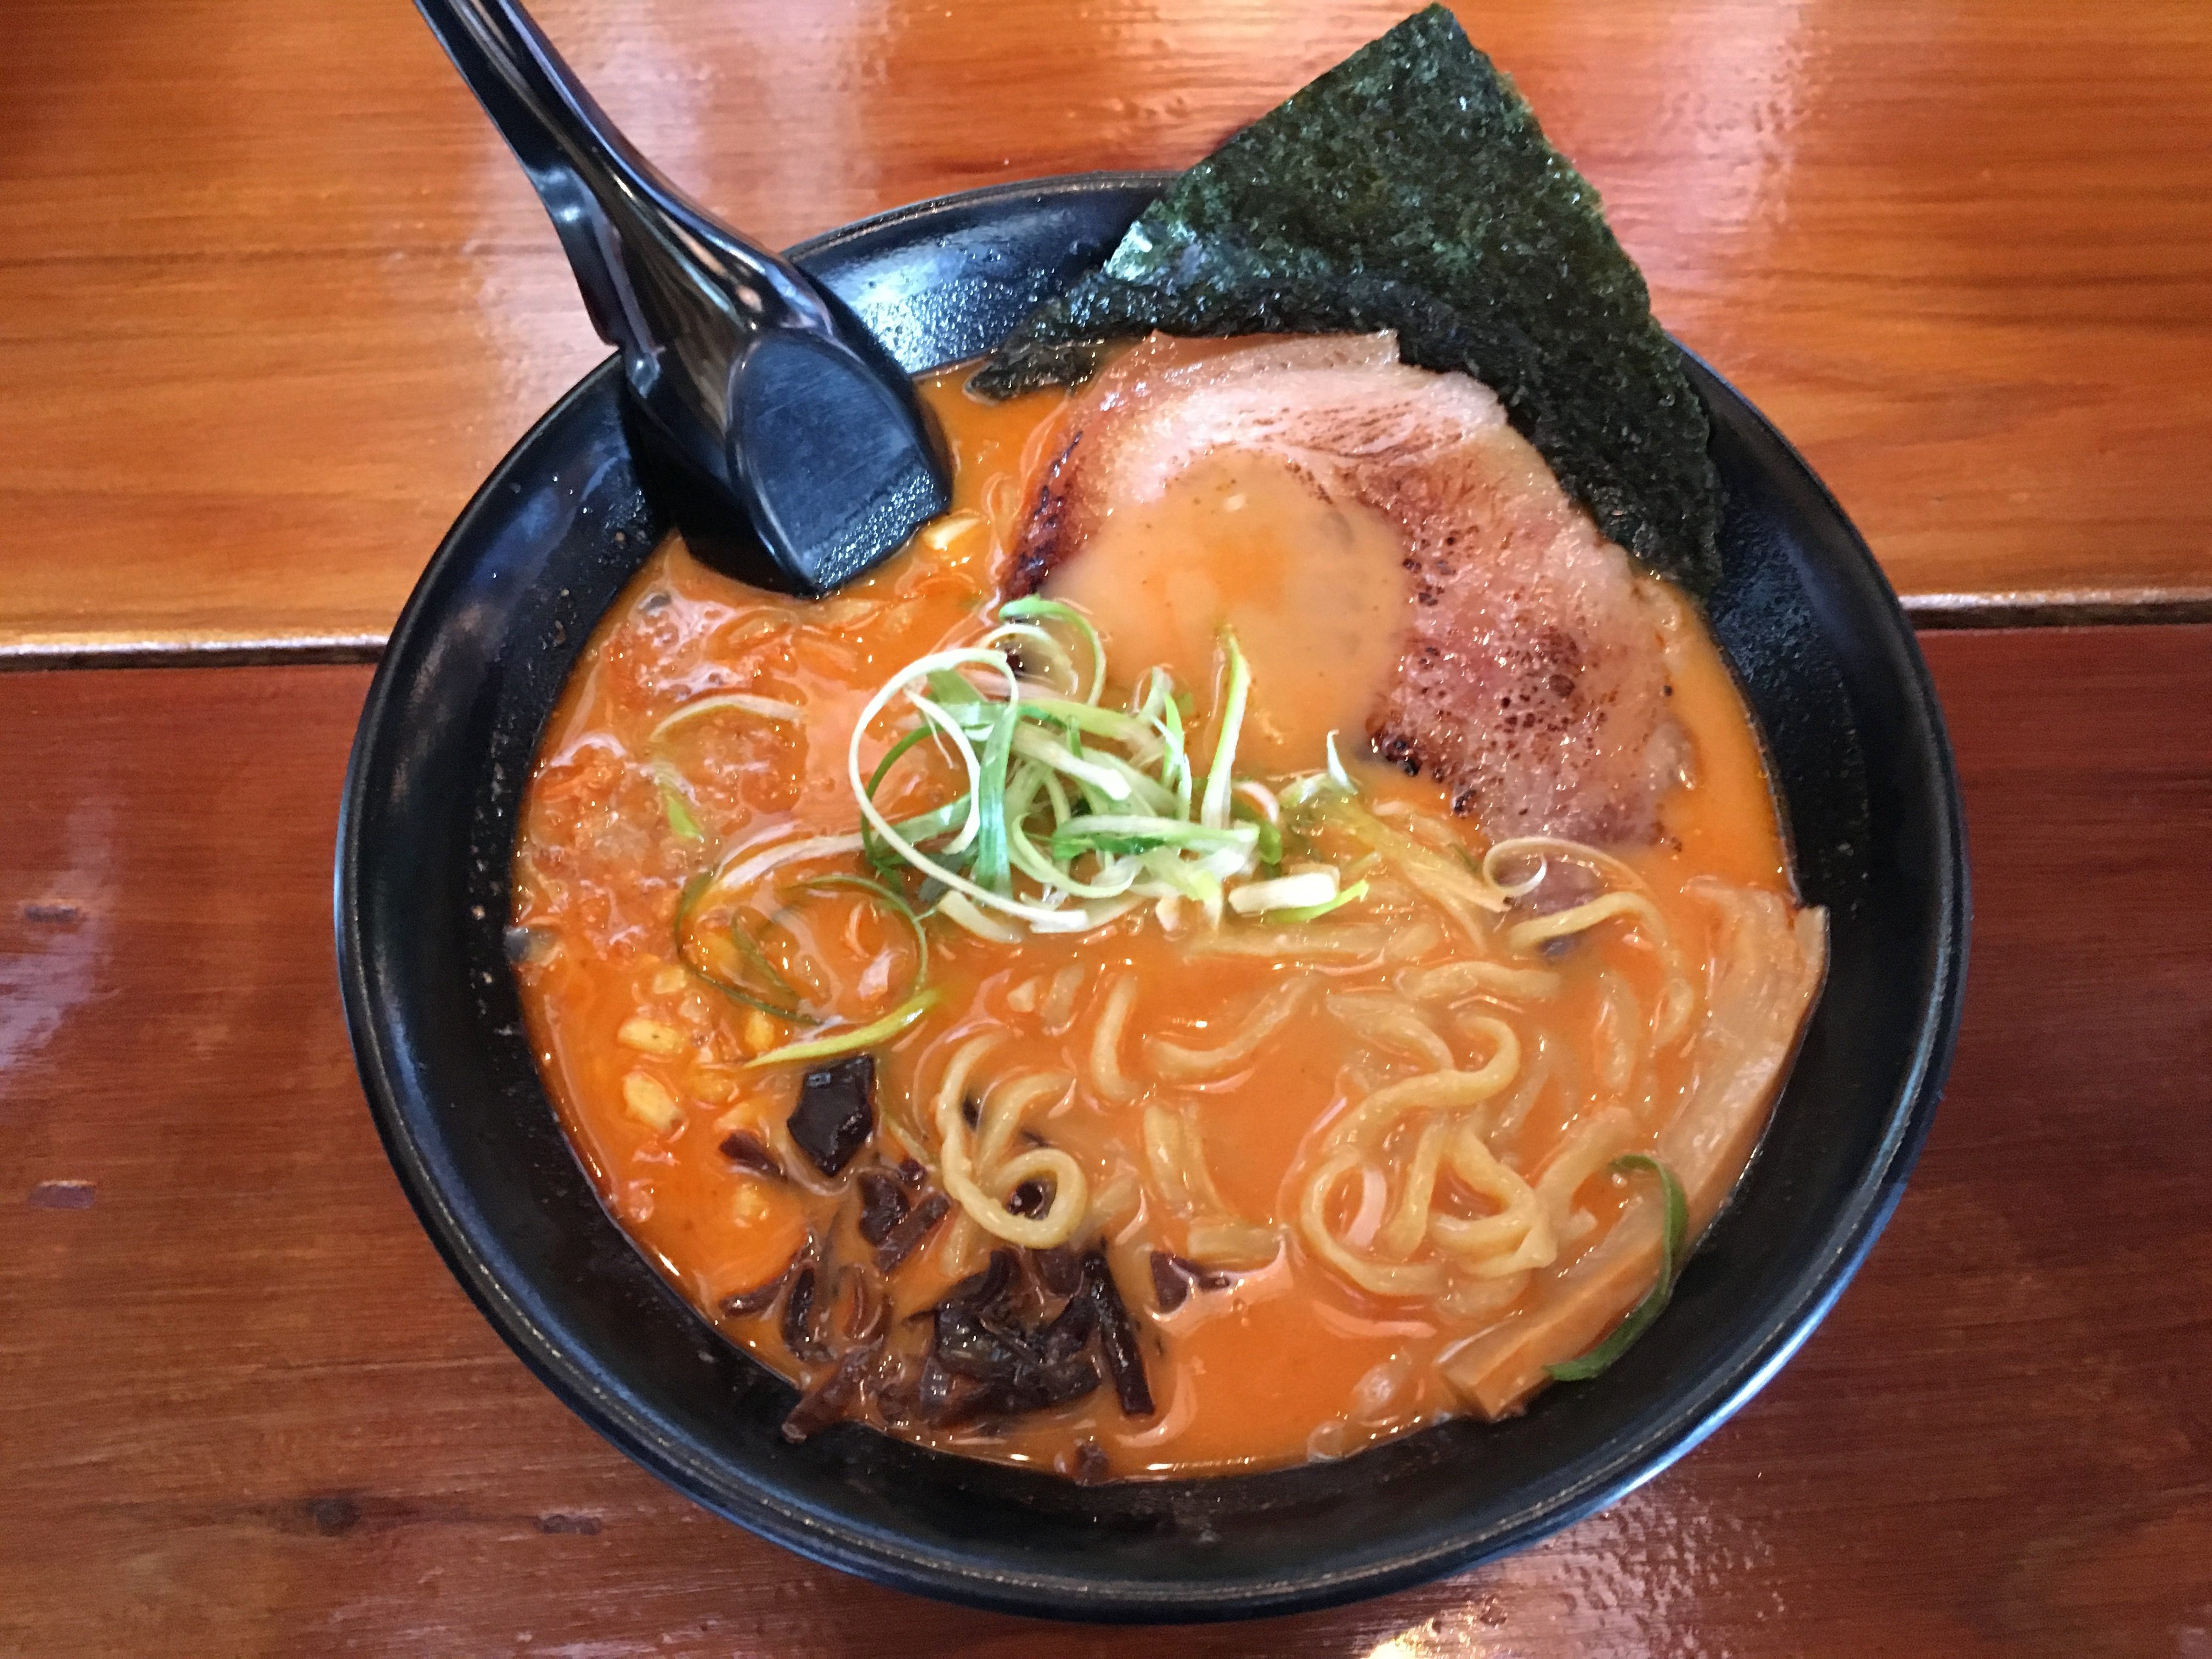 Ramen restaurant review FuddoYama Ramen (Beaverton) Self Taught Japanese